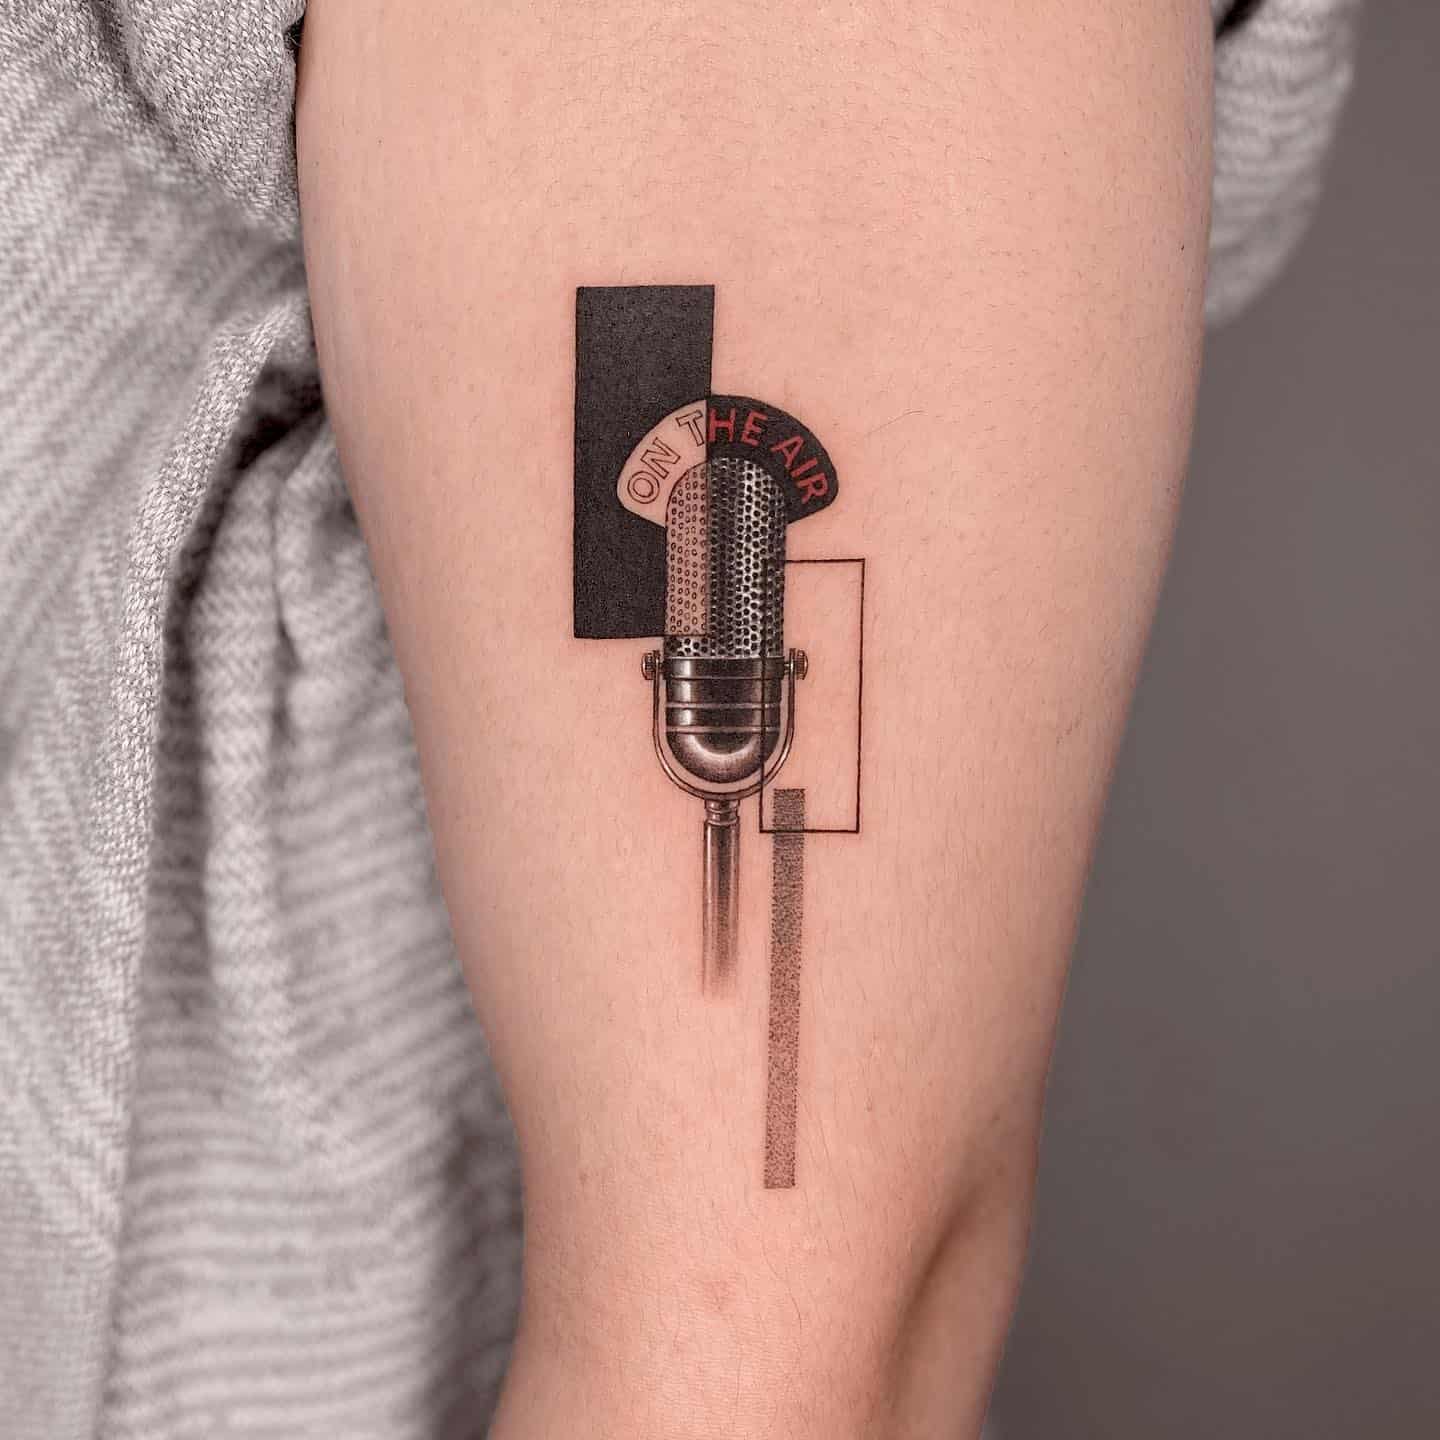 Microphone tattoo by graycodetattoo